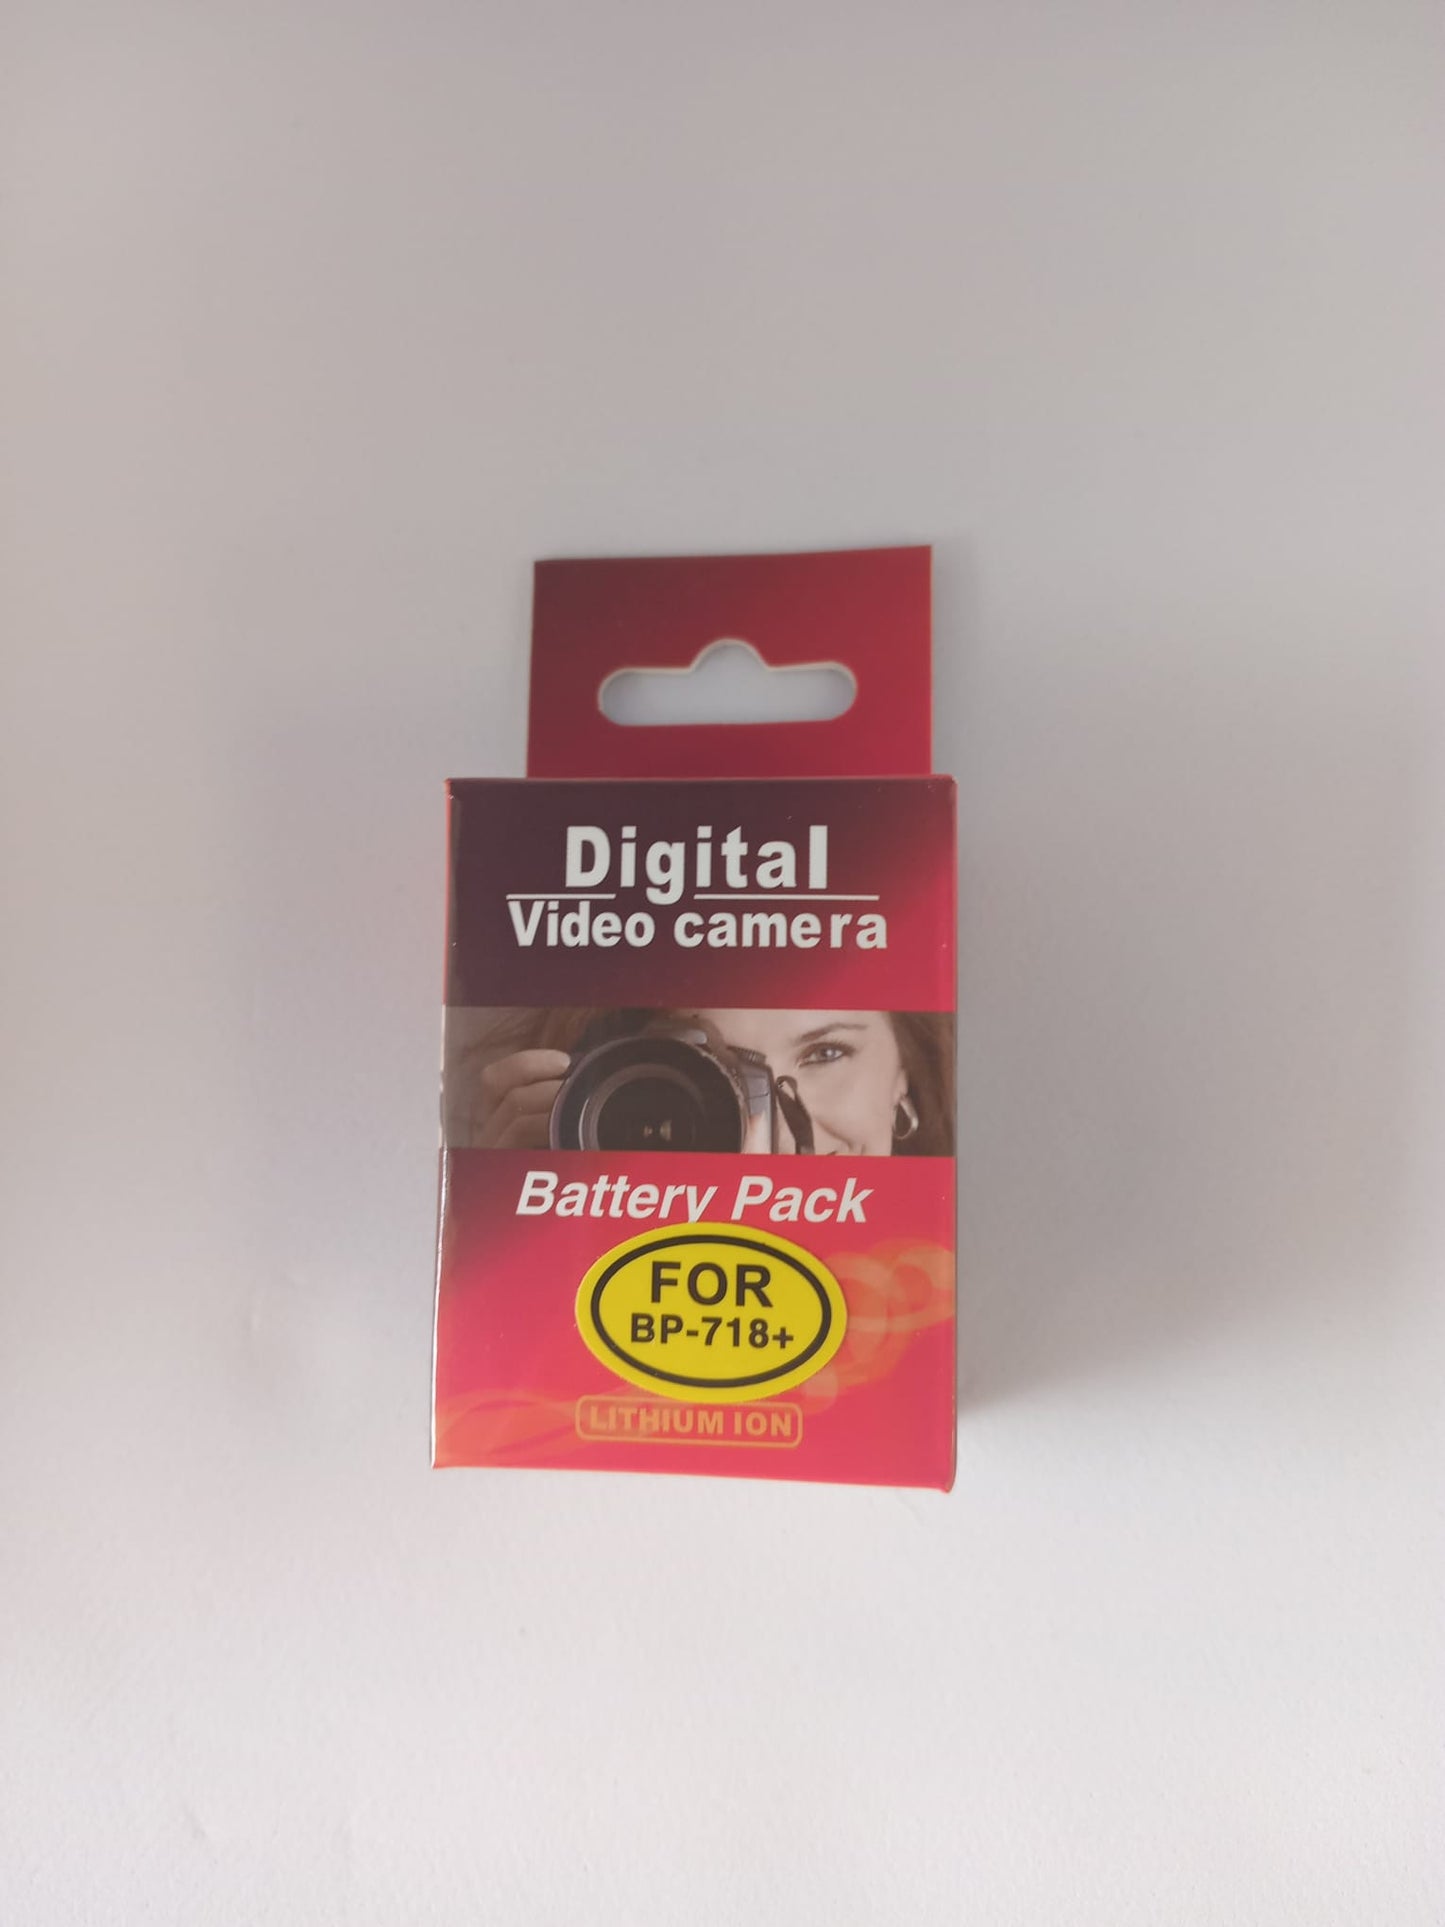 Digital video camera battery pack for BP-718+